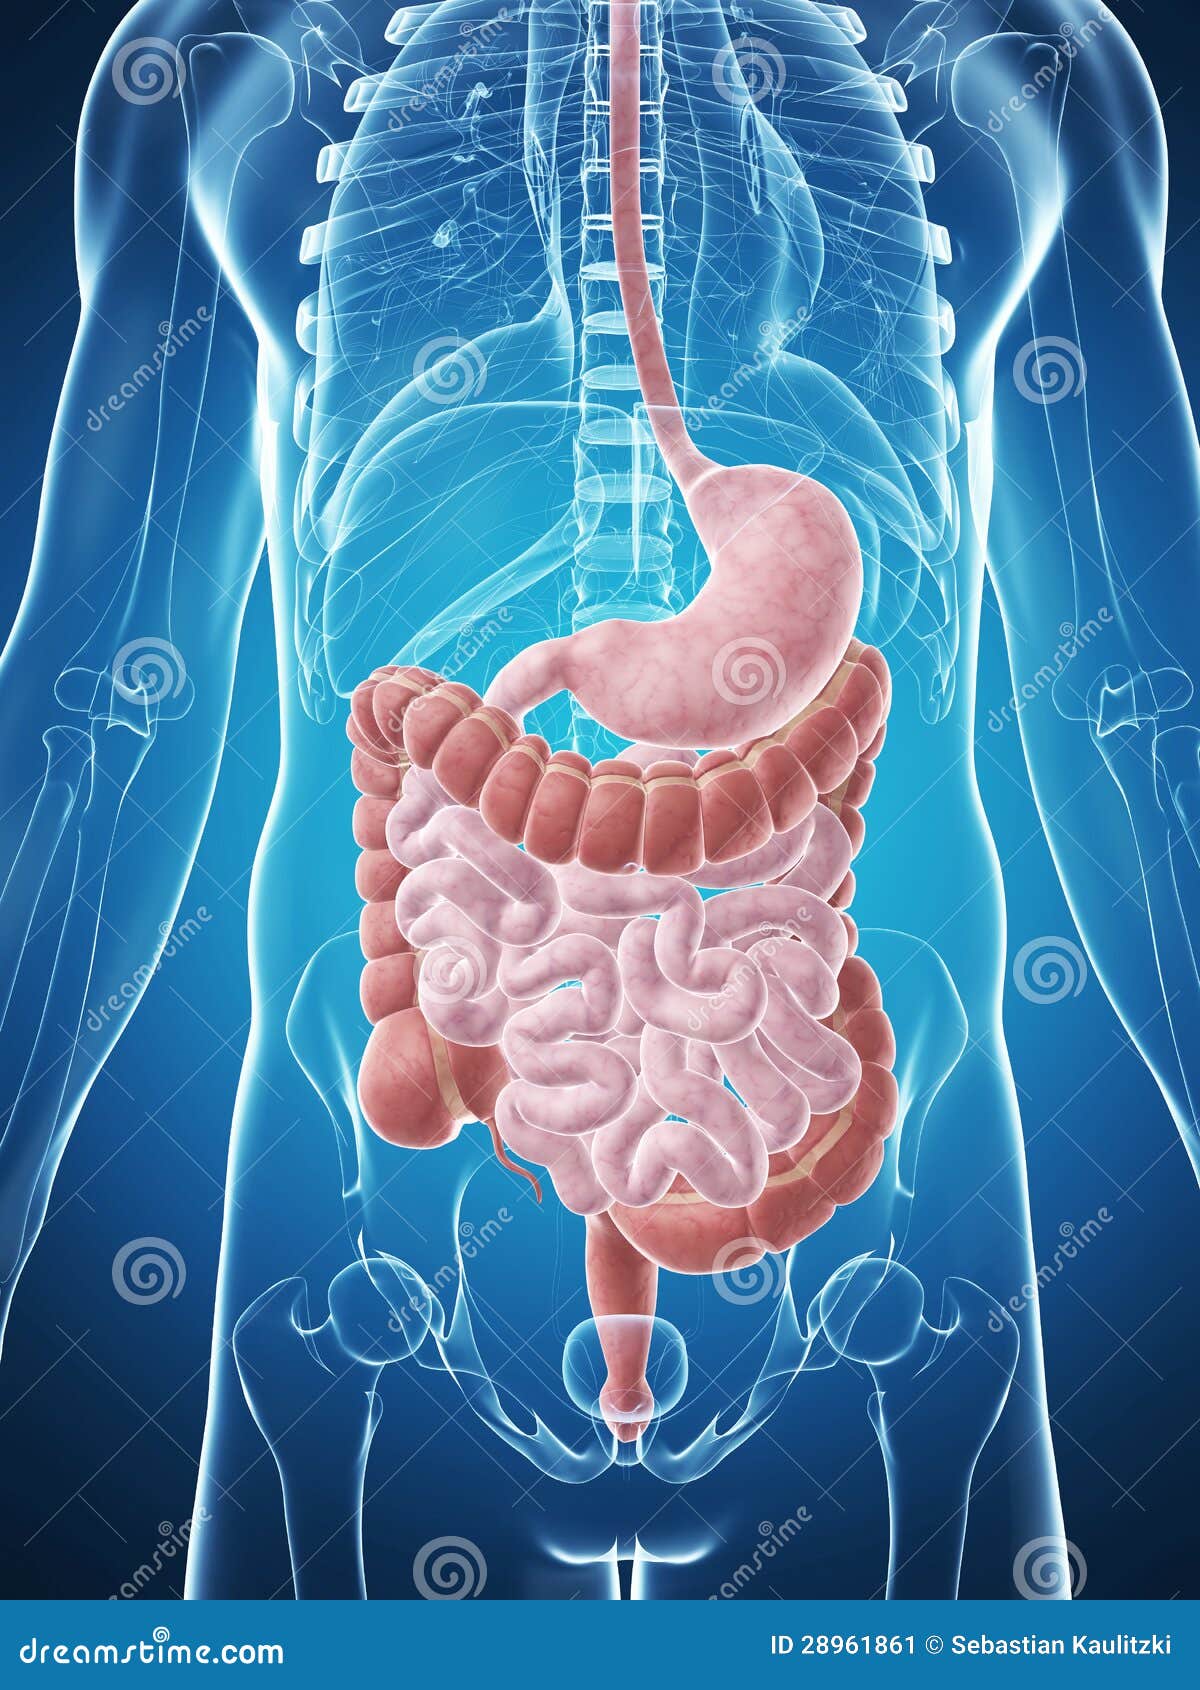 Male digestive system stock illustration. Illustration of human - 28961861